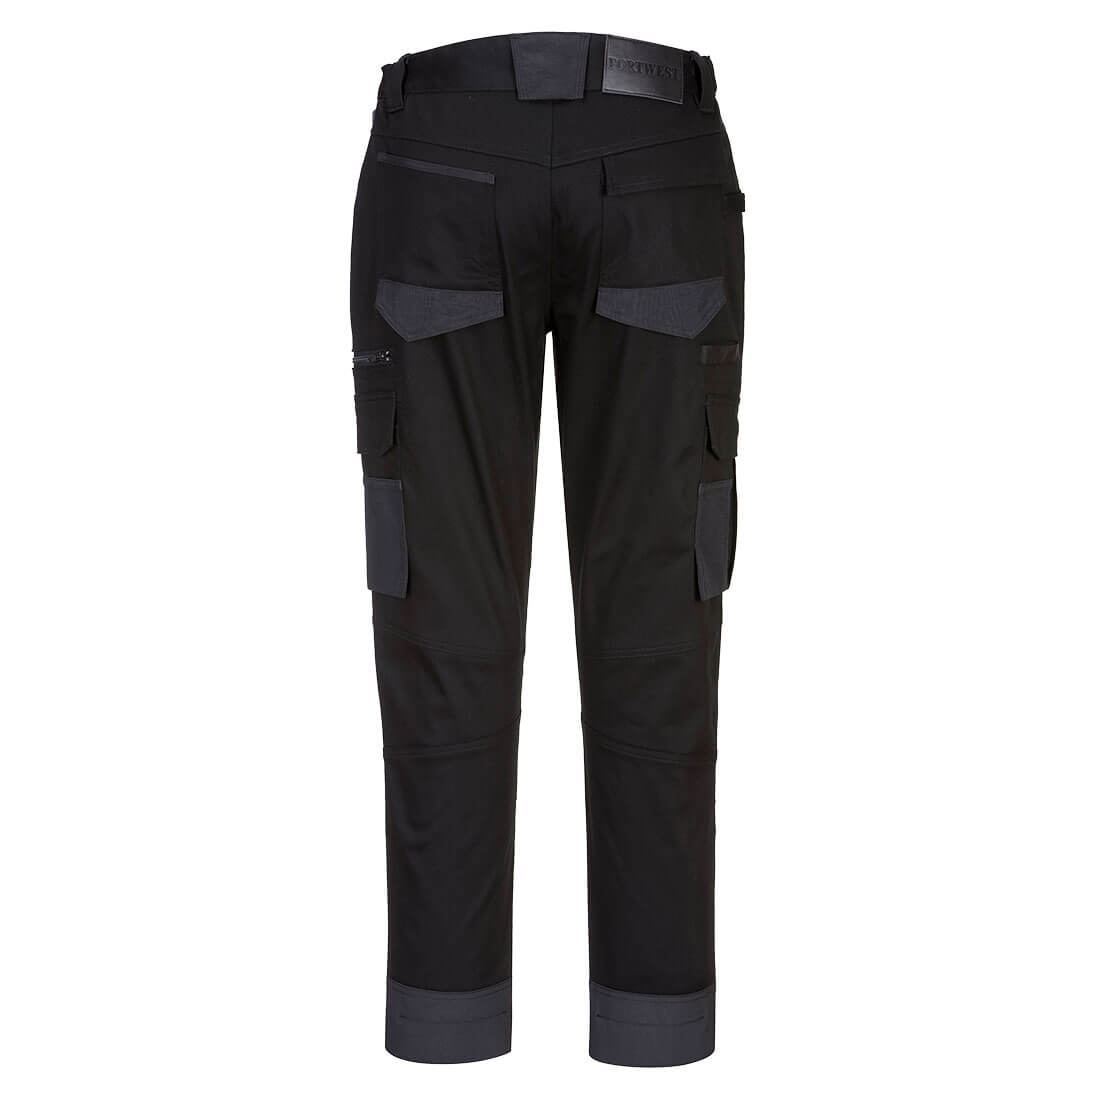 Slim Fit Stretch Trade Pants Black - MP707 Back